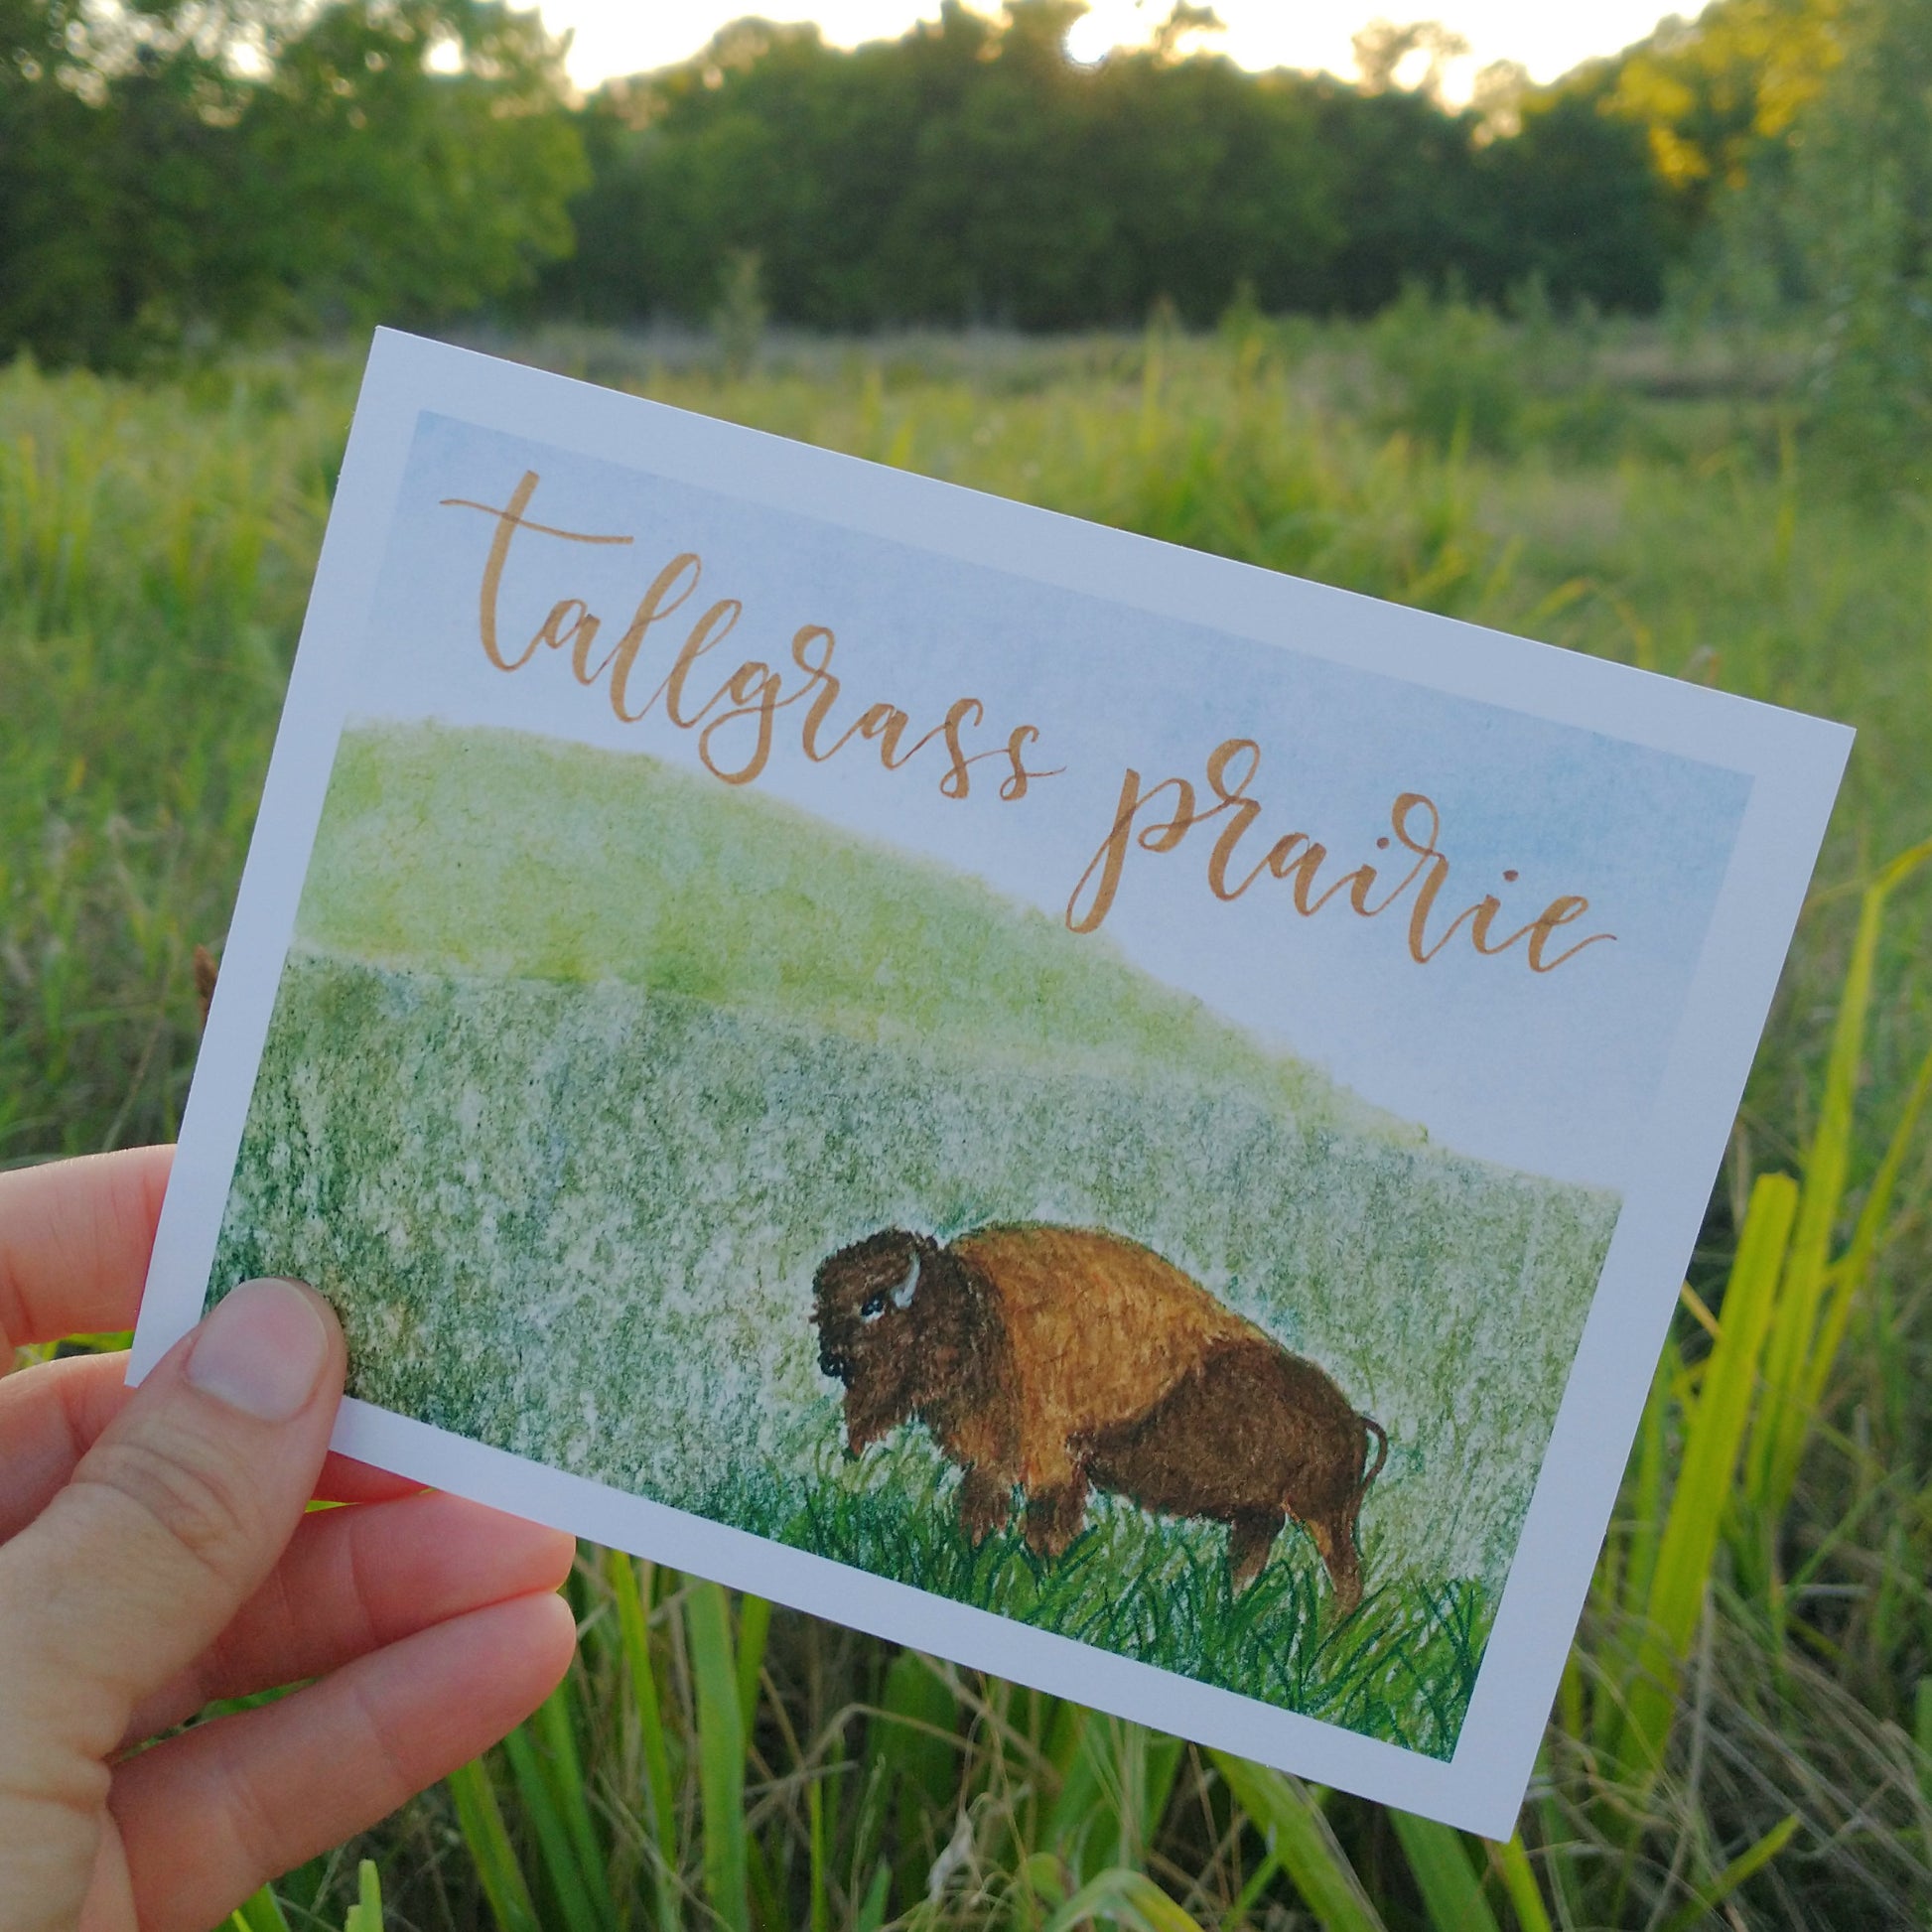 Tallgrass Prairie National Preserve Study